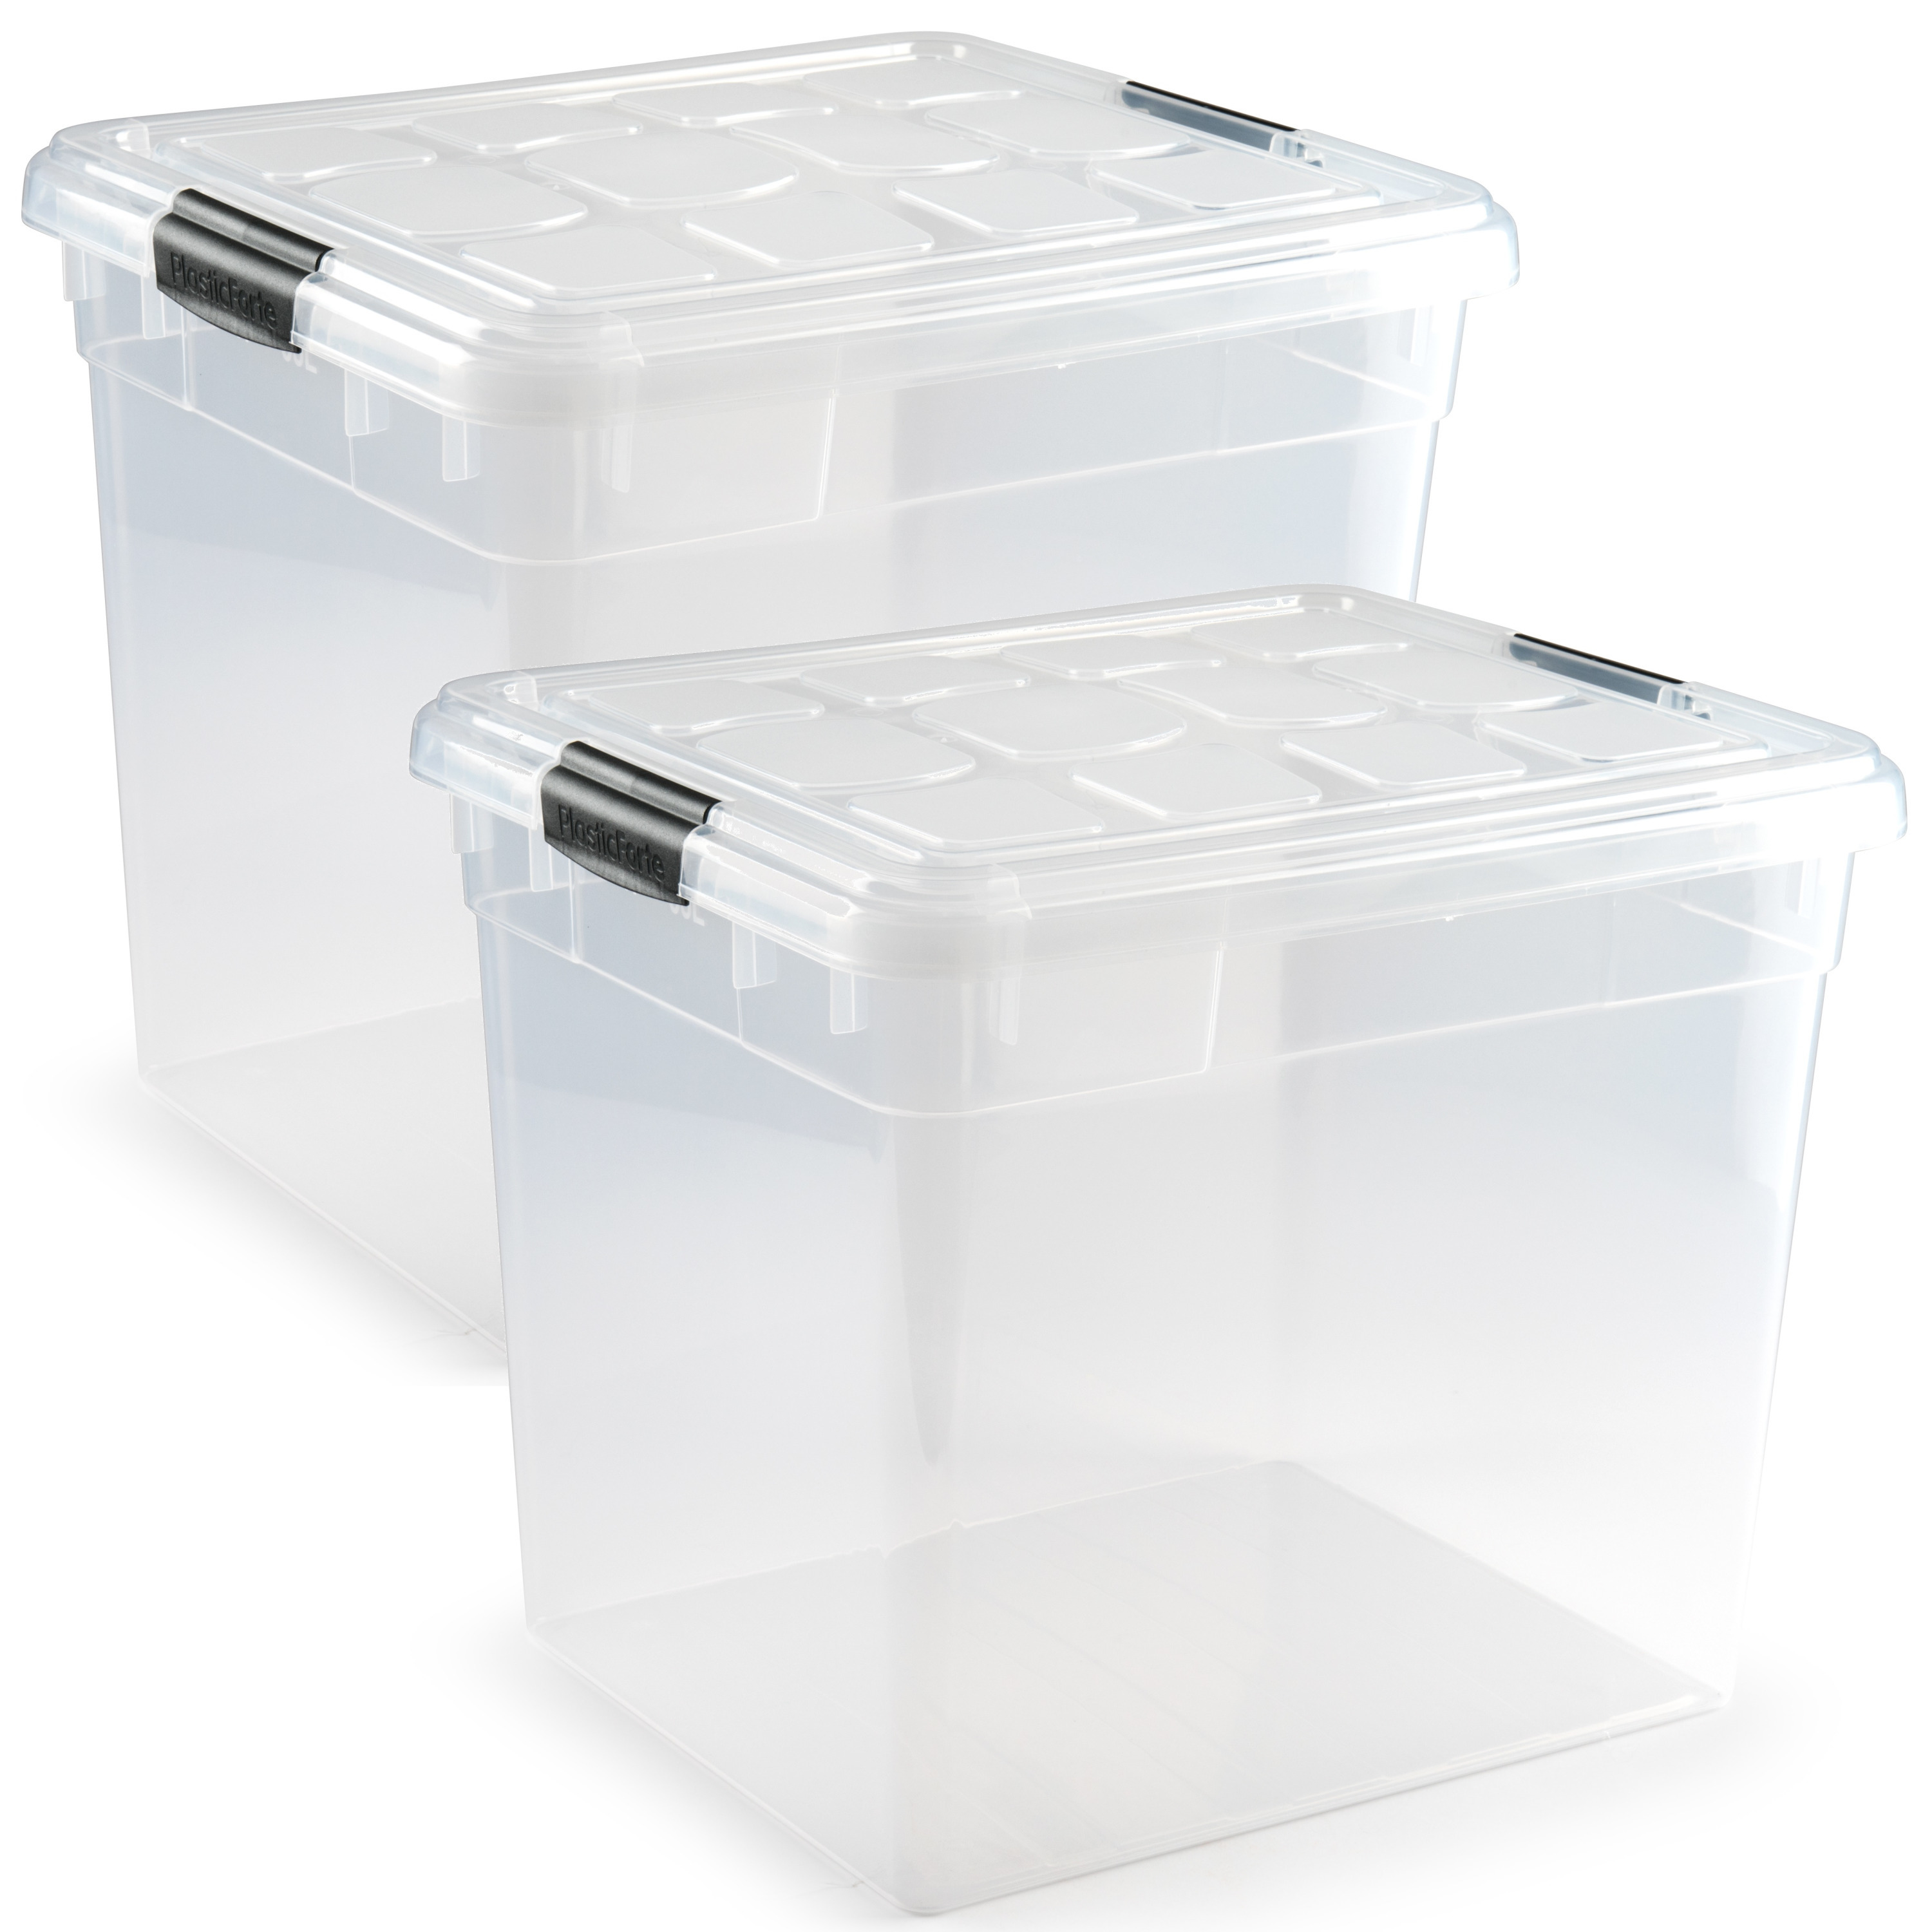 4x Opslagbakken-organizers met deksel 35 liter transparant